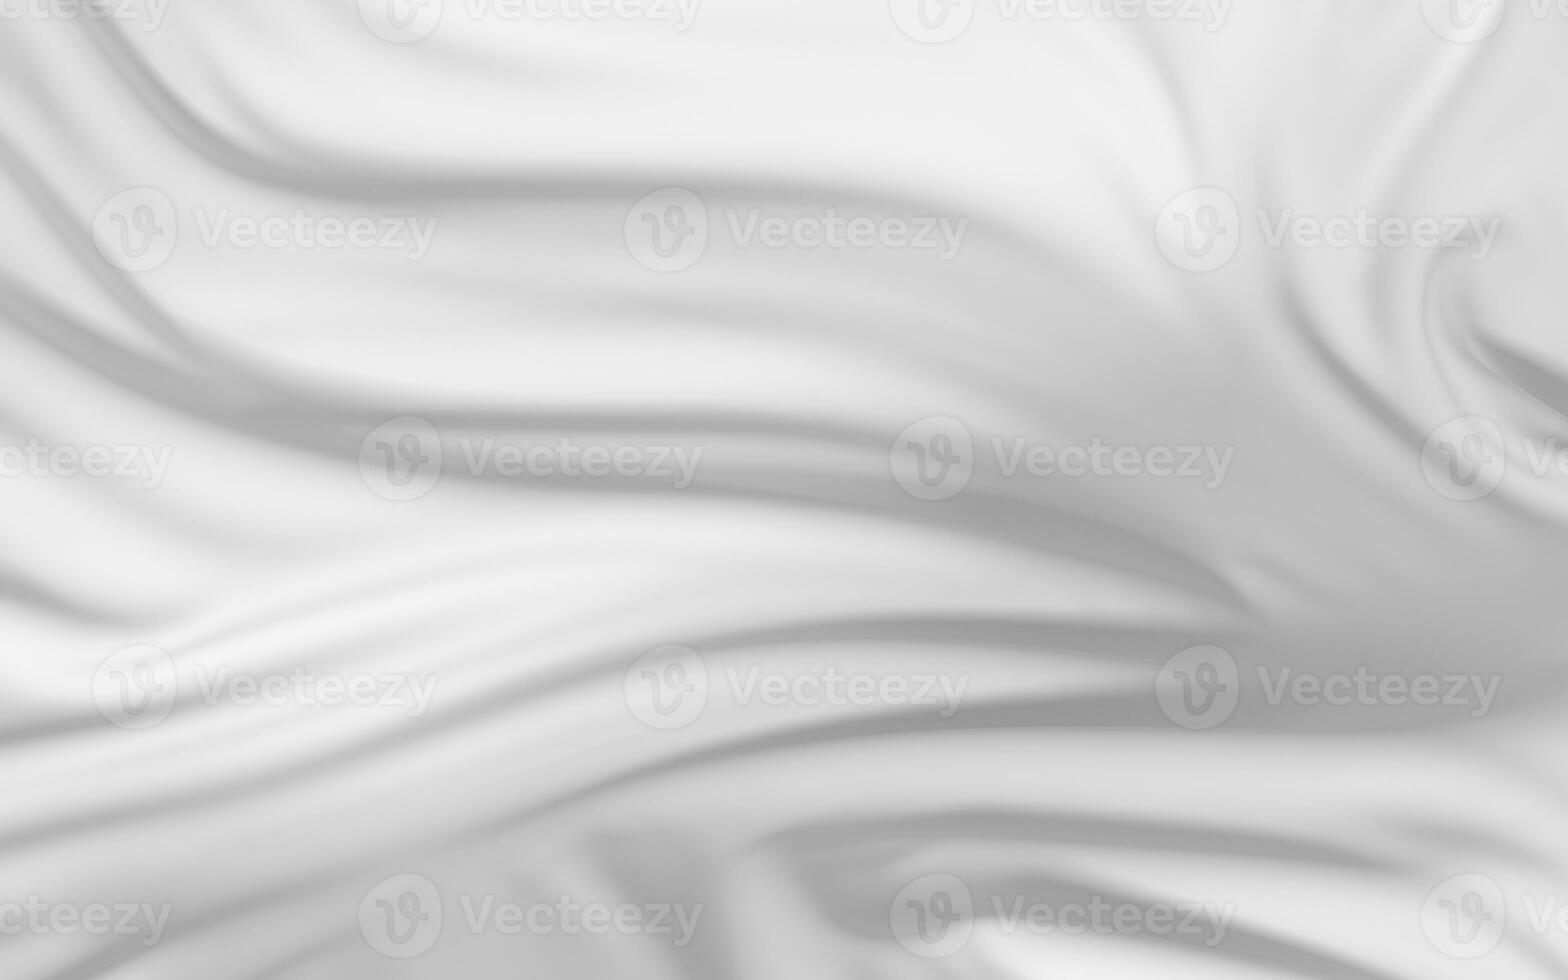 fluido ropa con blanco fondo, 3d representación. foto